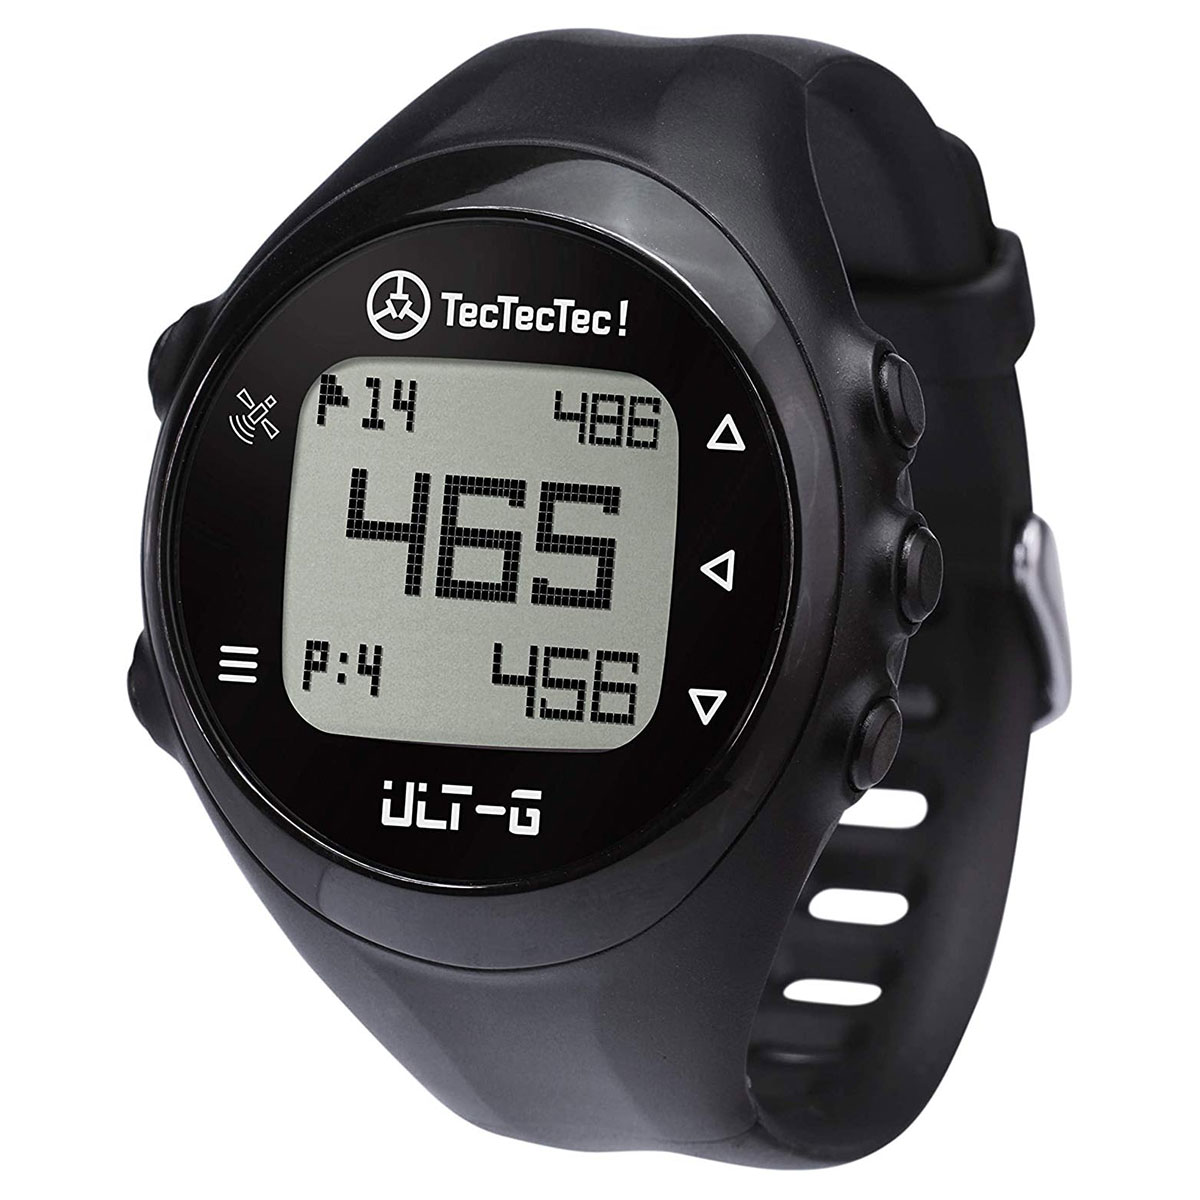 TecTecTec Ult-G GPS Golf Watch